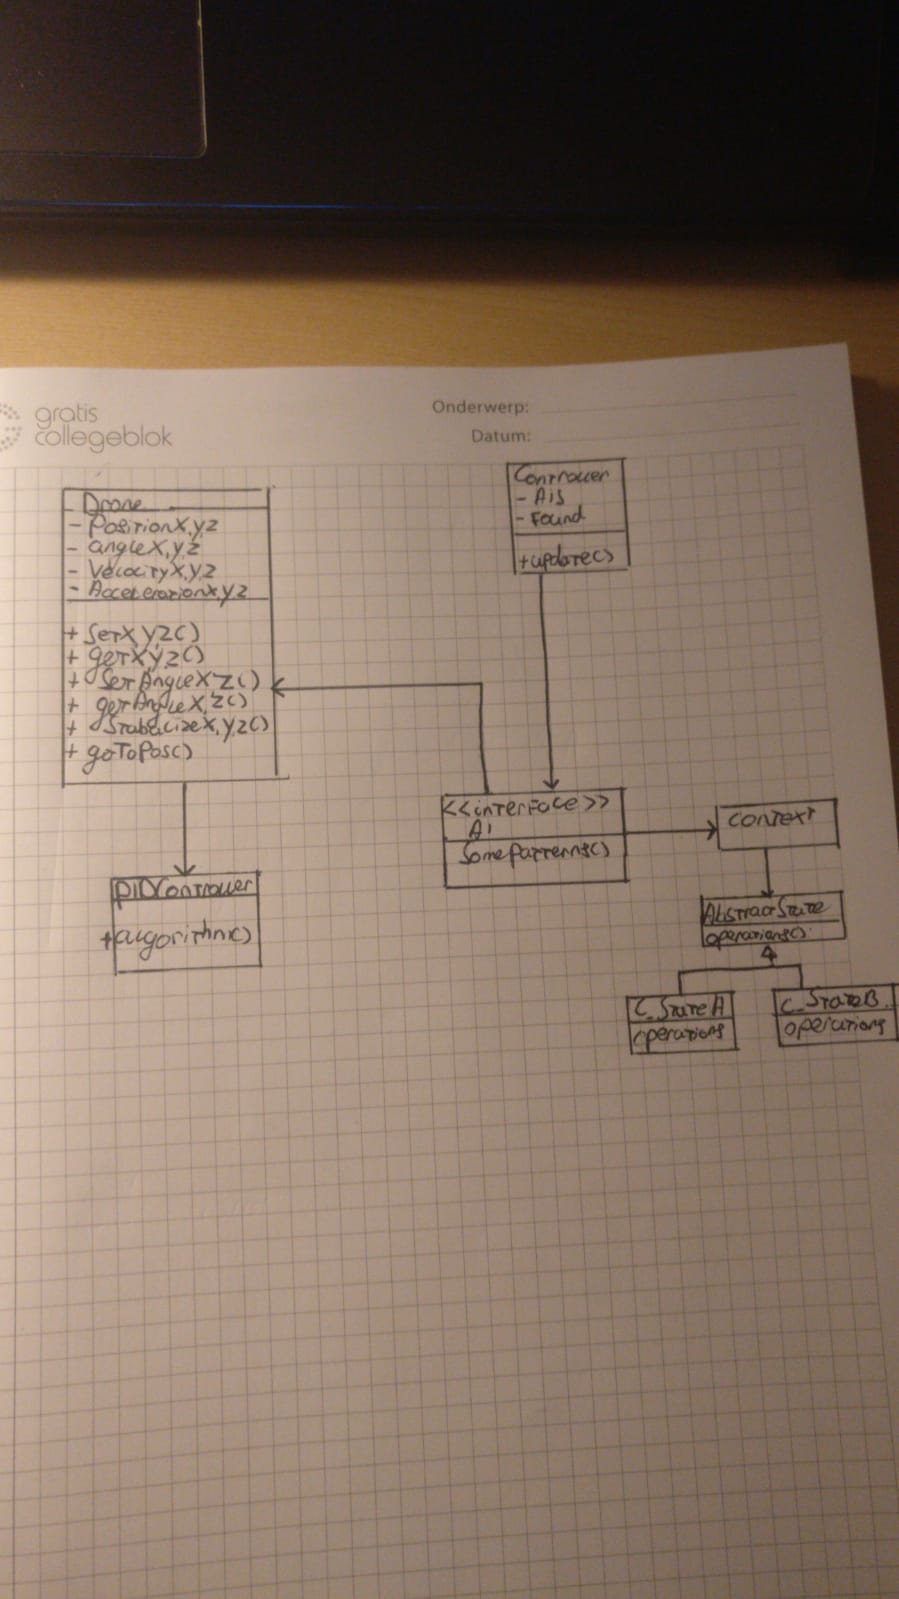 File:Placeholder UML Class diagram.jpg